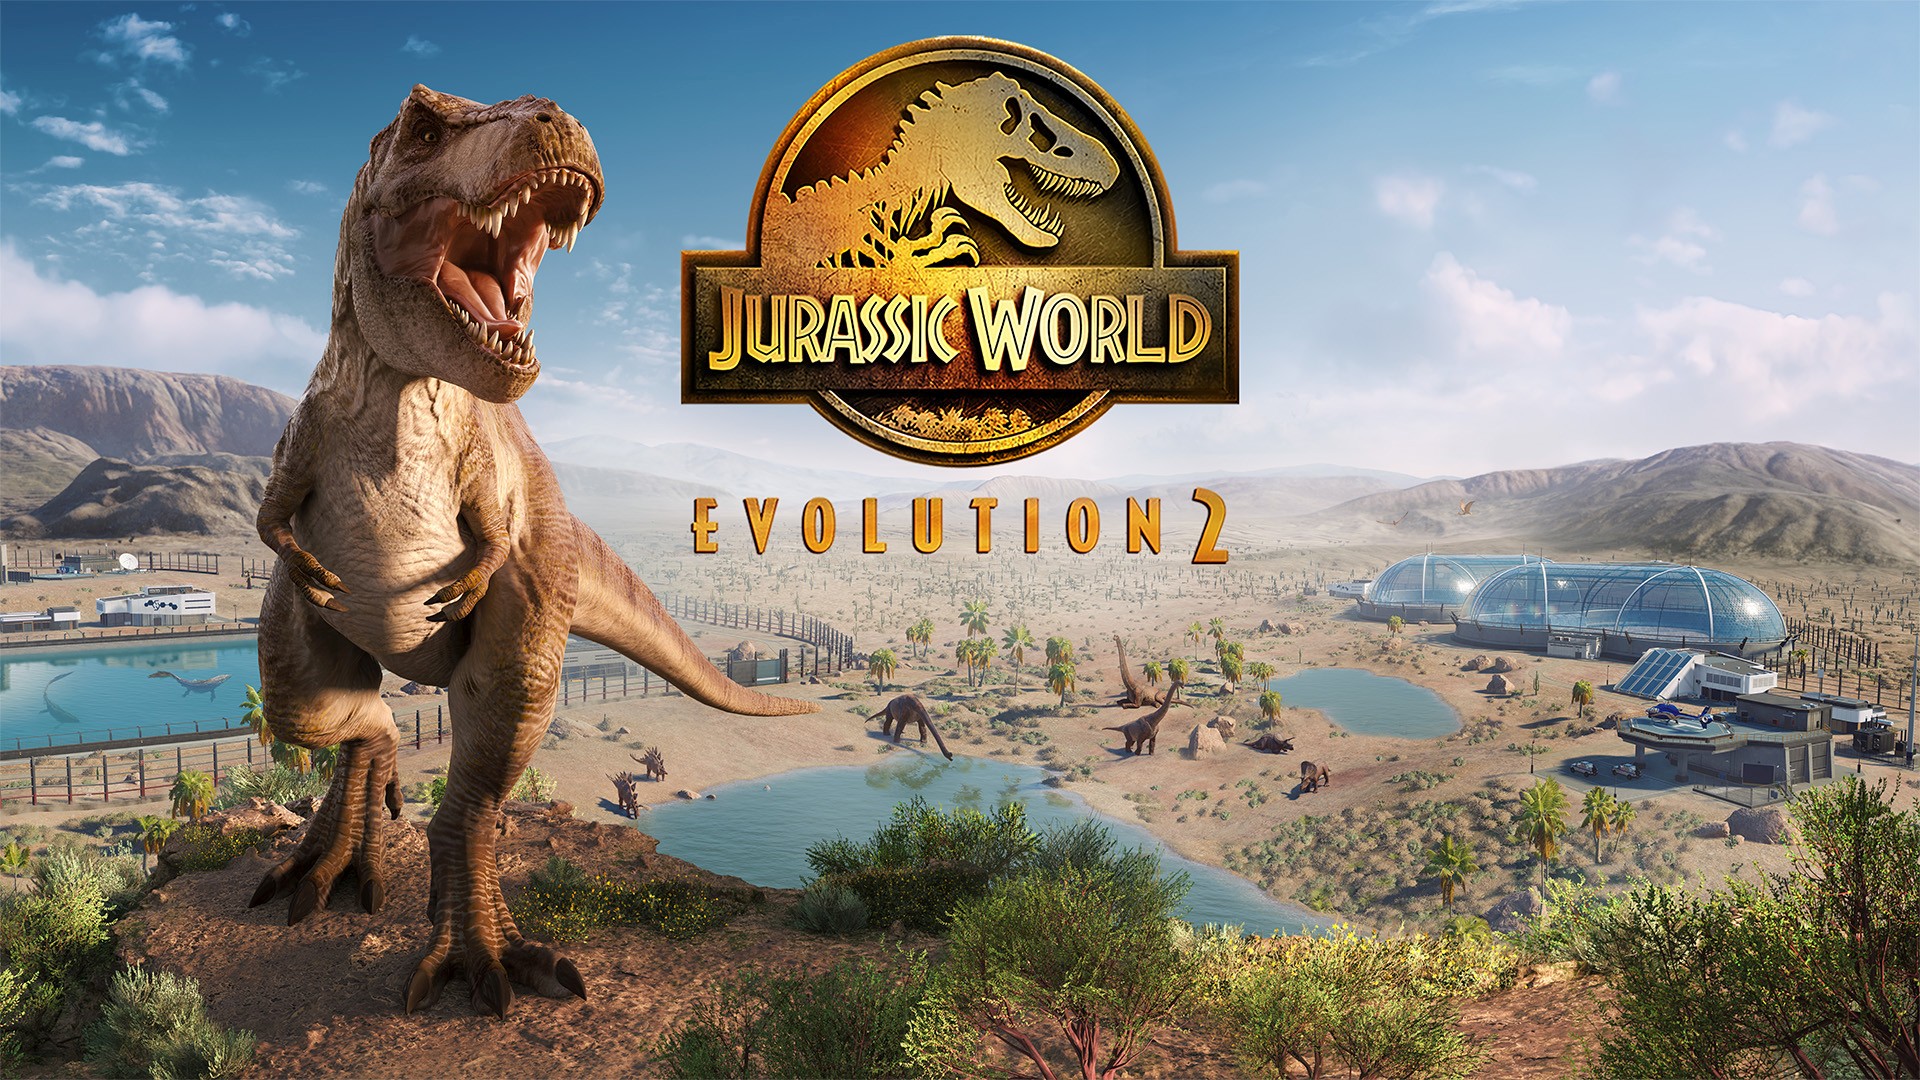 Video For Les dinosaures prennent vie dans Jurassic World Evolution 2, disponible sur Xbox One et Xbox Series X|S